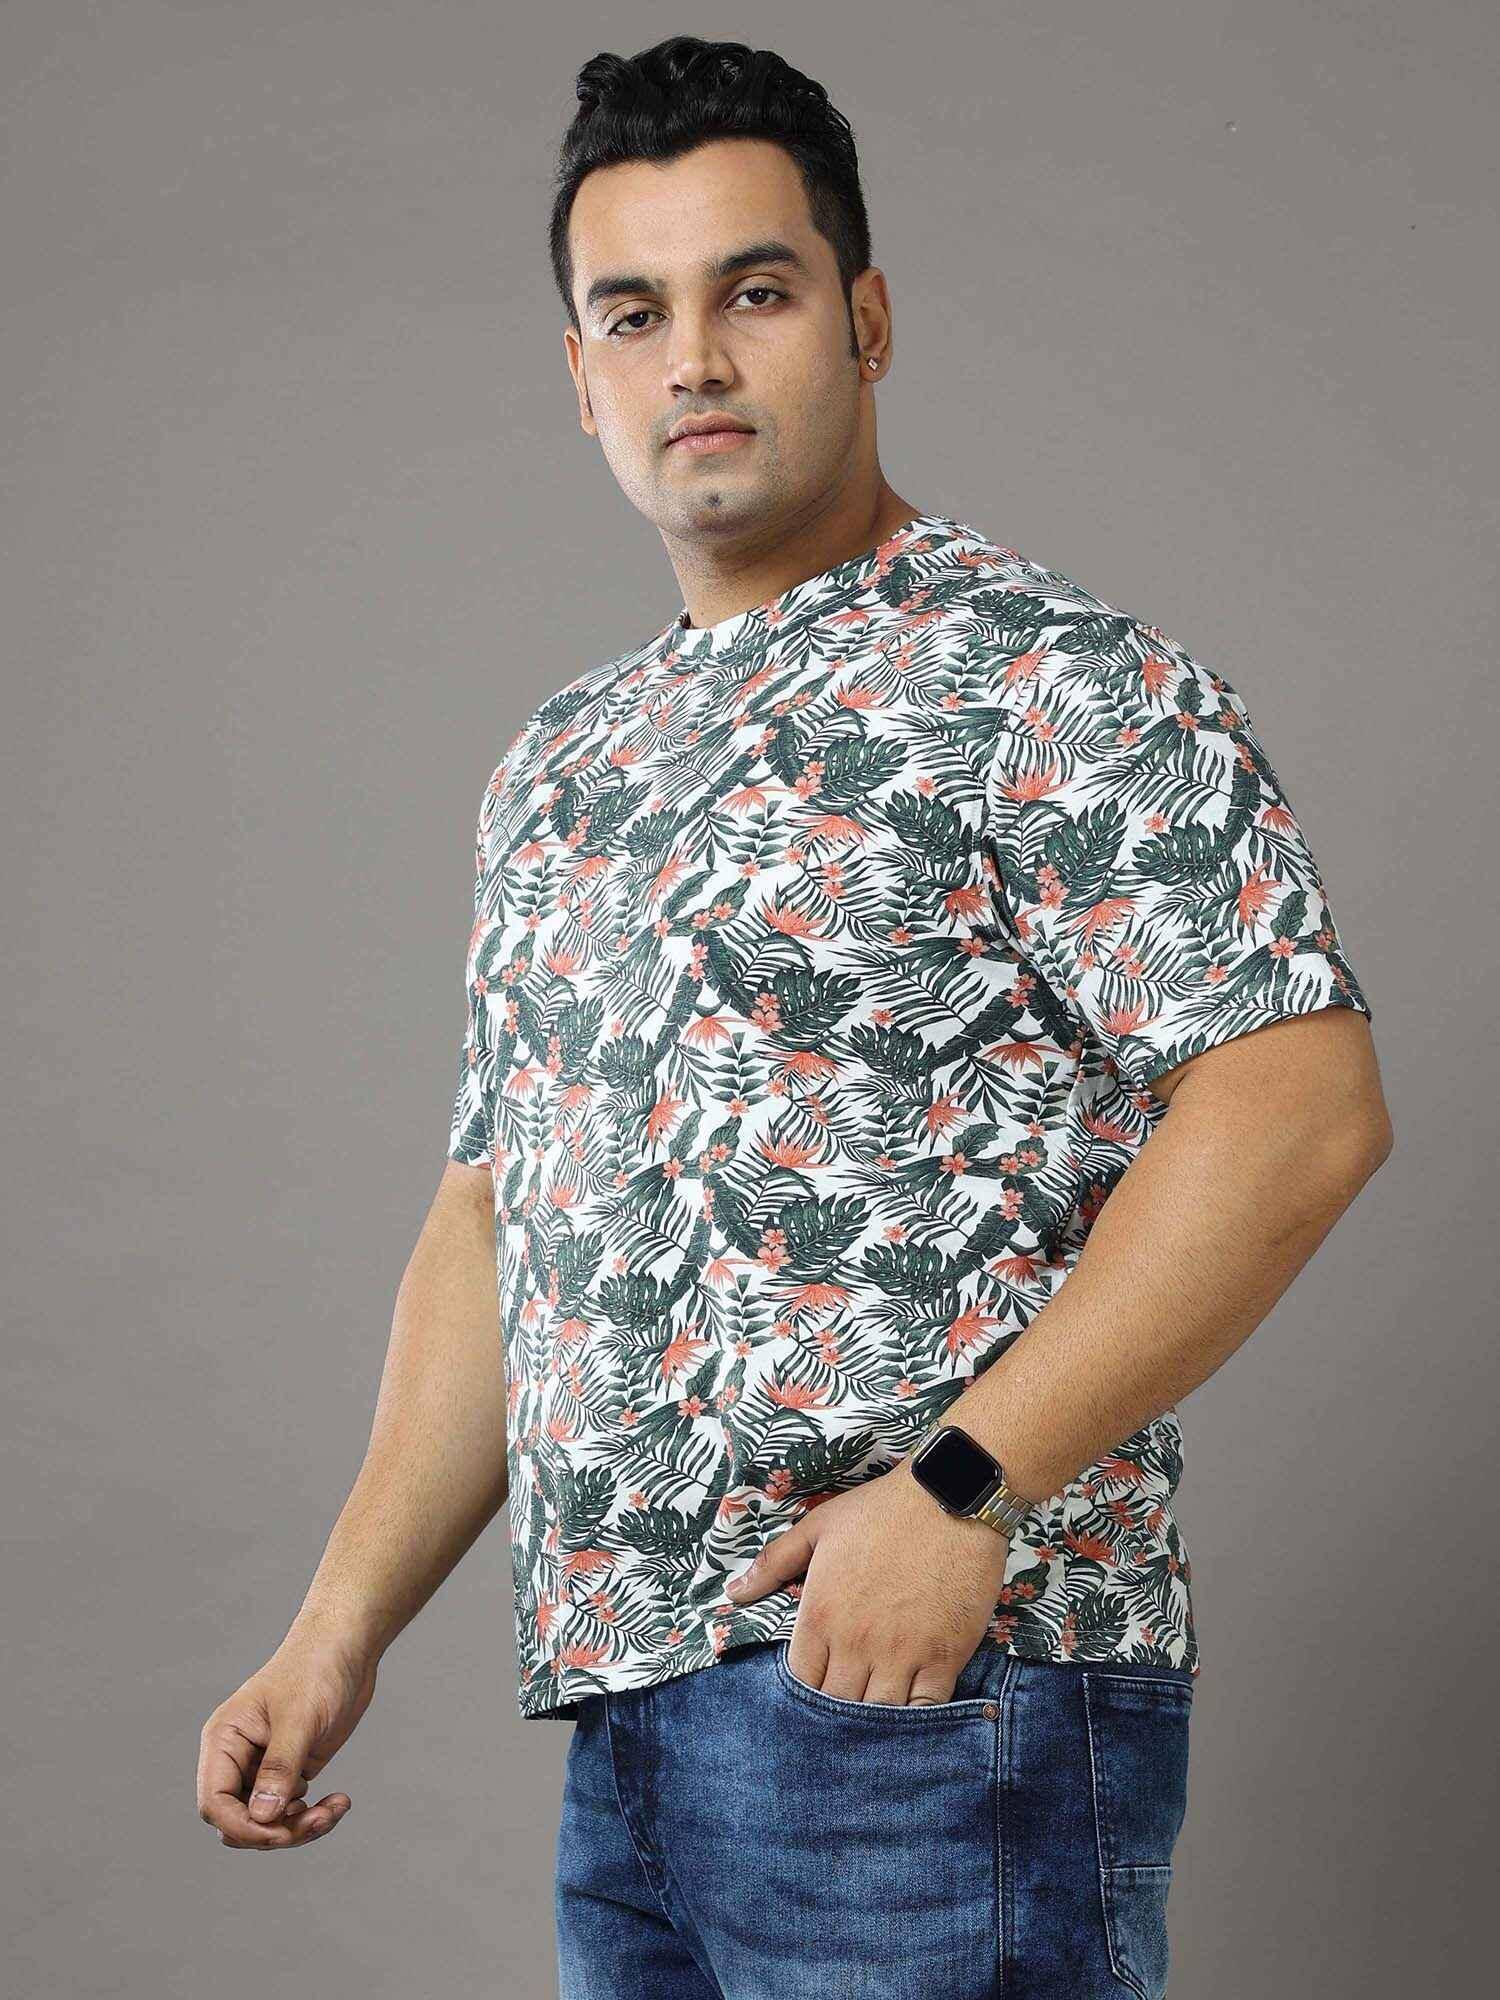 OAK Leaf Green Digital Printed Round Neck T-Shirt Men's Plus Size - Guniaa Fashions